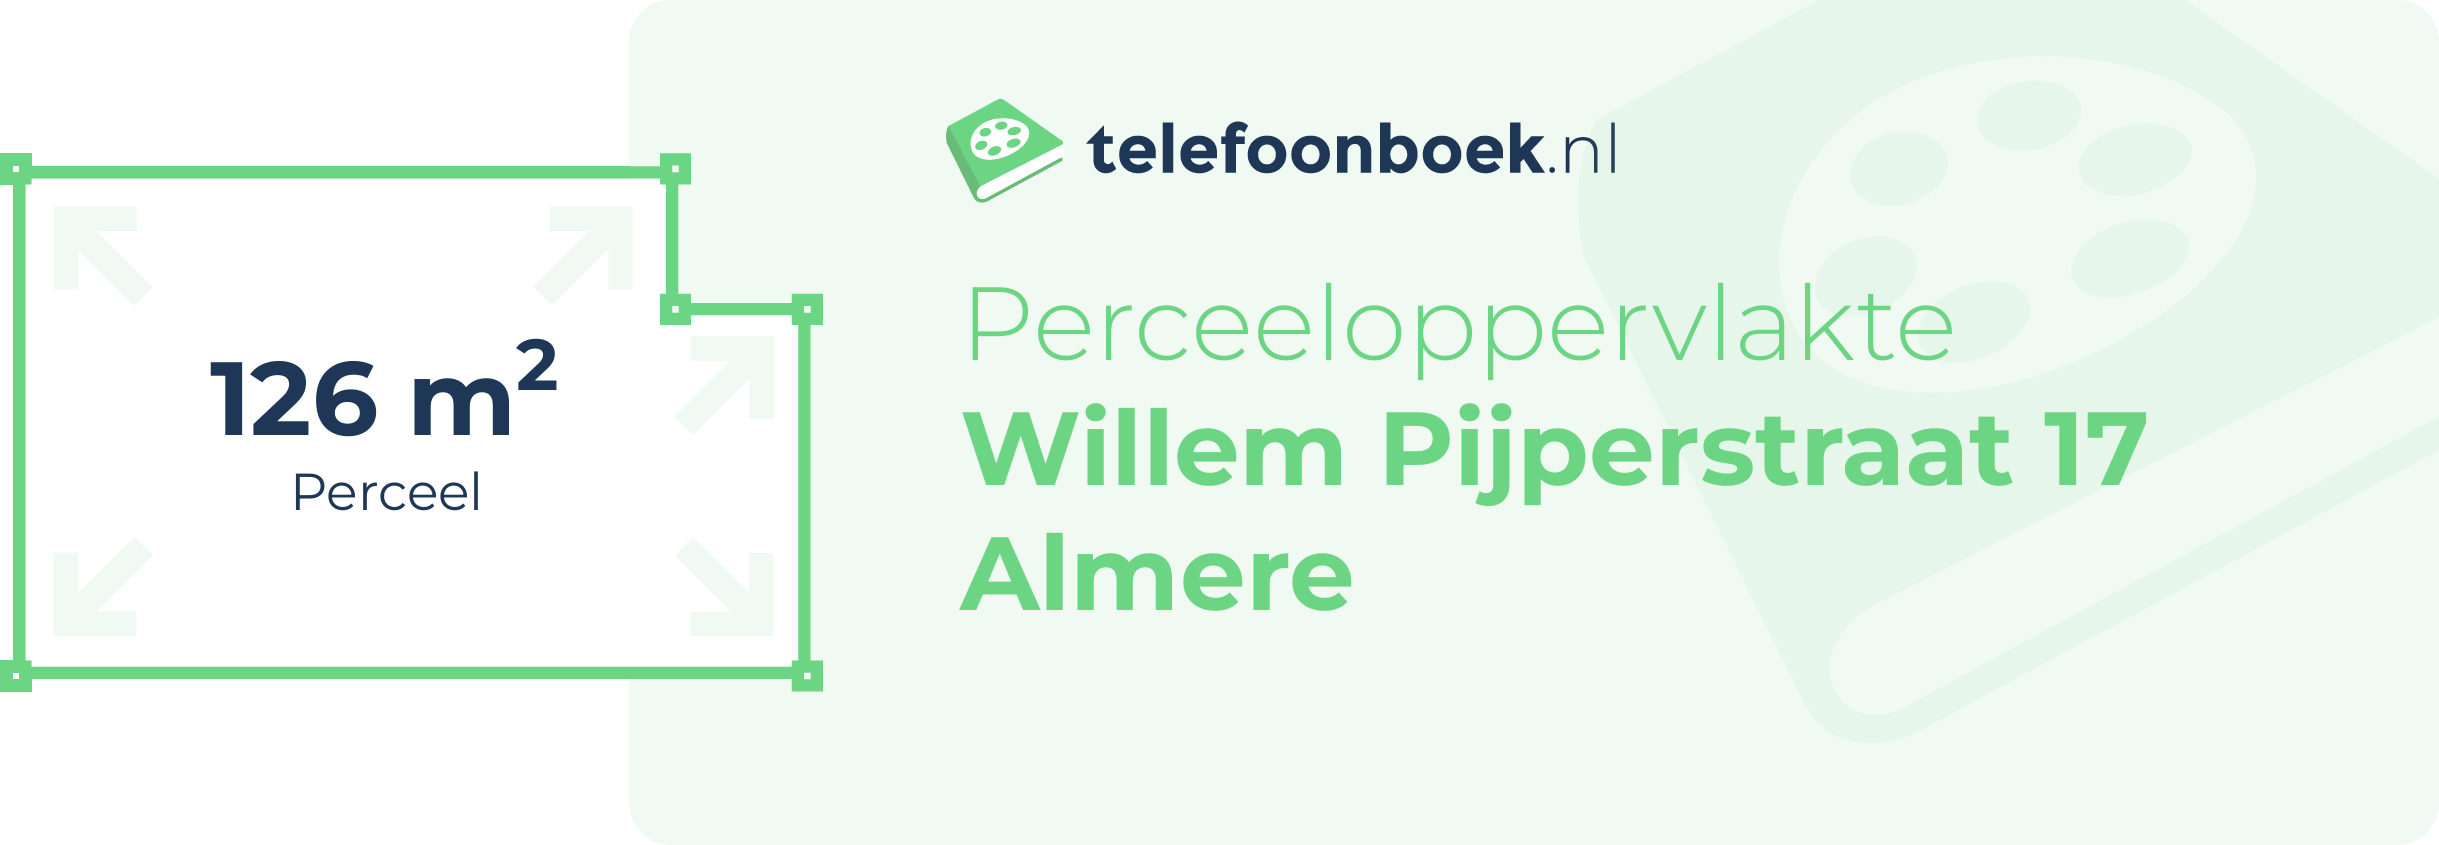 Perceeloppervlakte Willem Pijperstraat 17 Almere